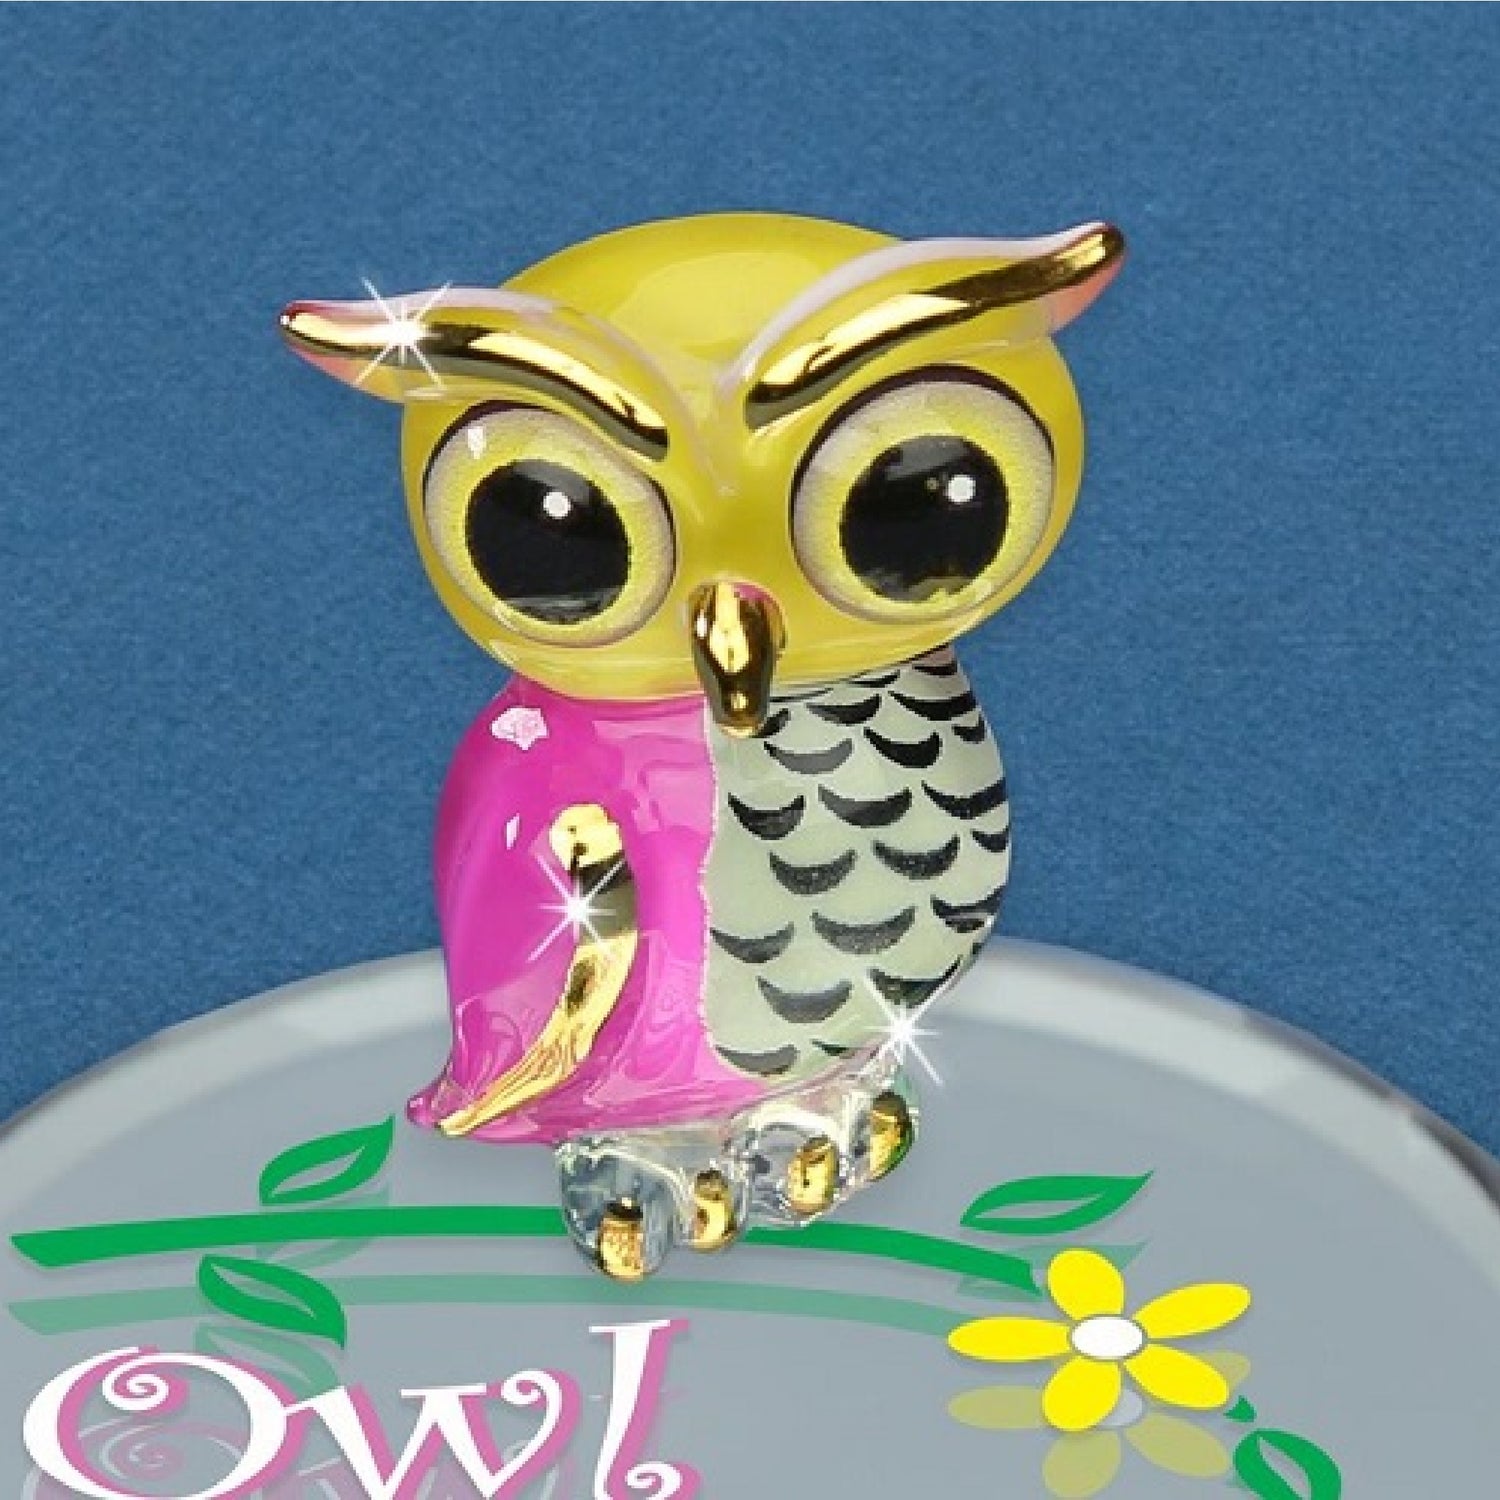 Glass Baron "Owl Always Love You" Figure